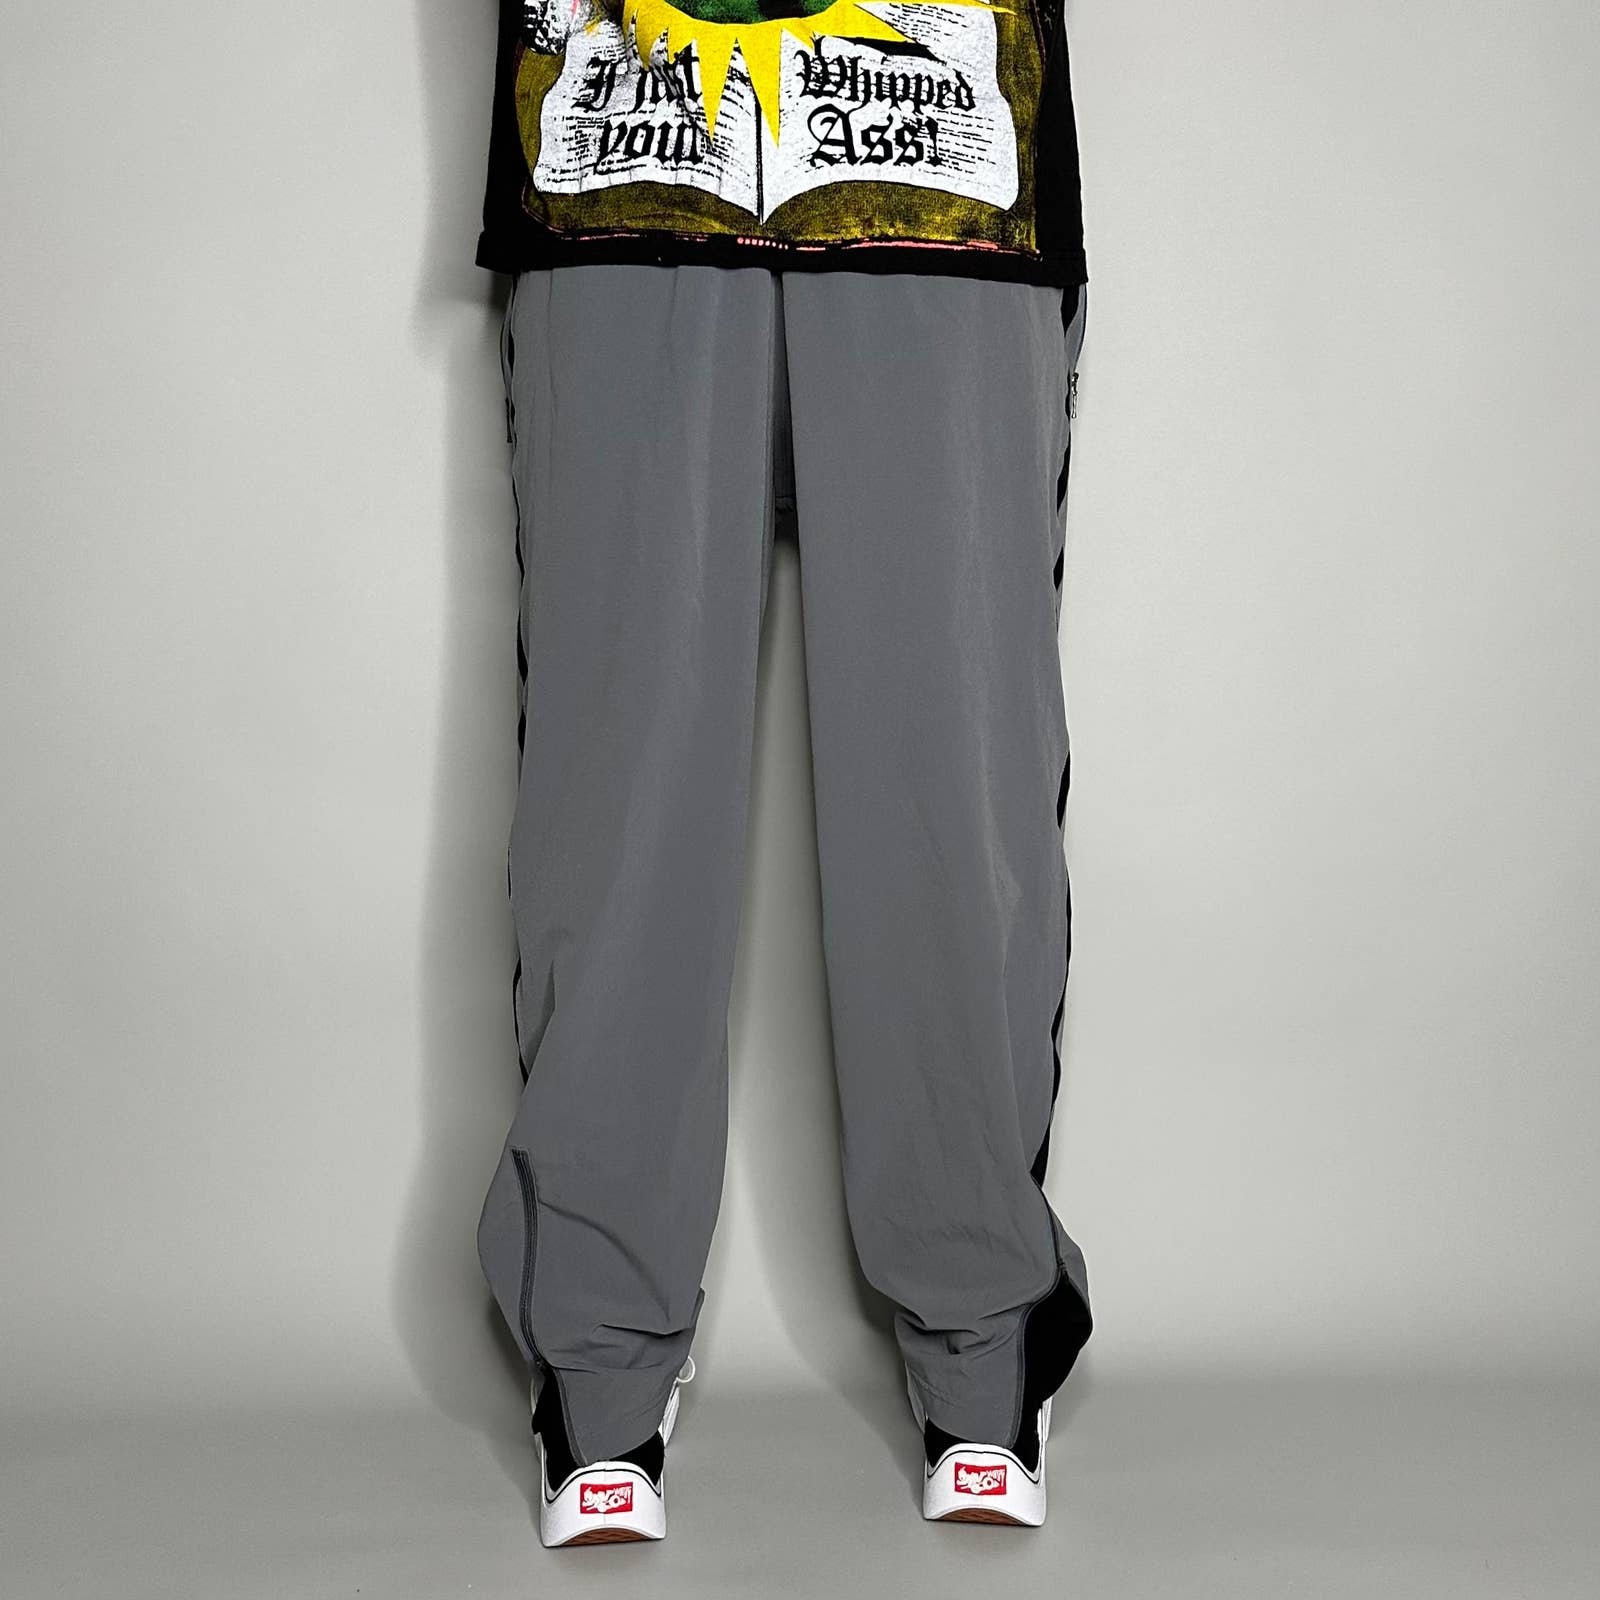 Nike Sportswear Essential Sweatpants FOR SALE! - PicClick